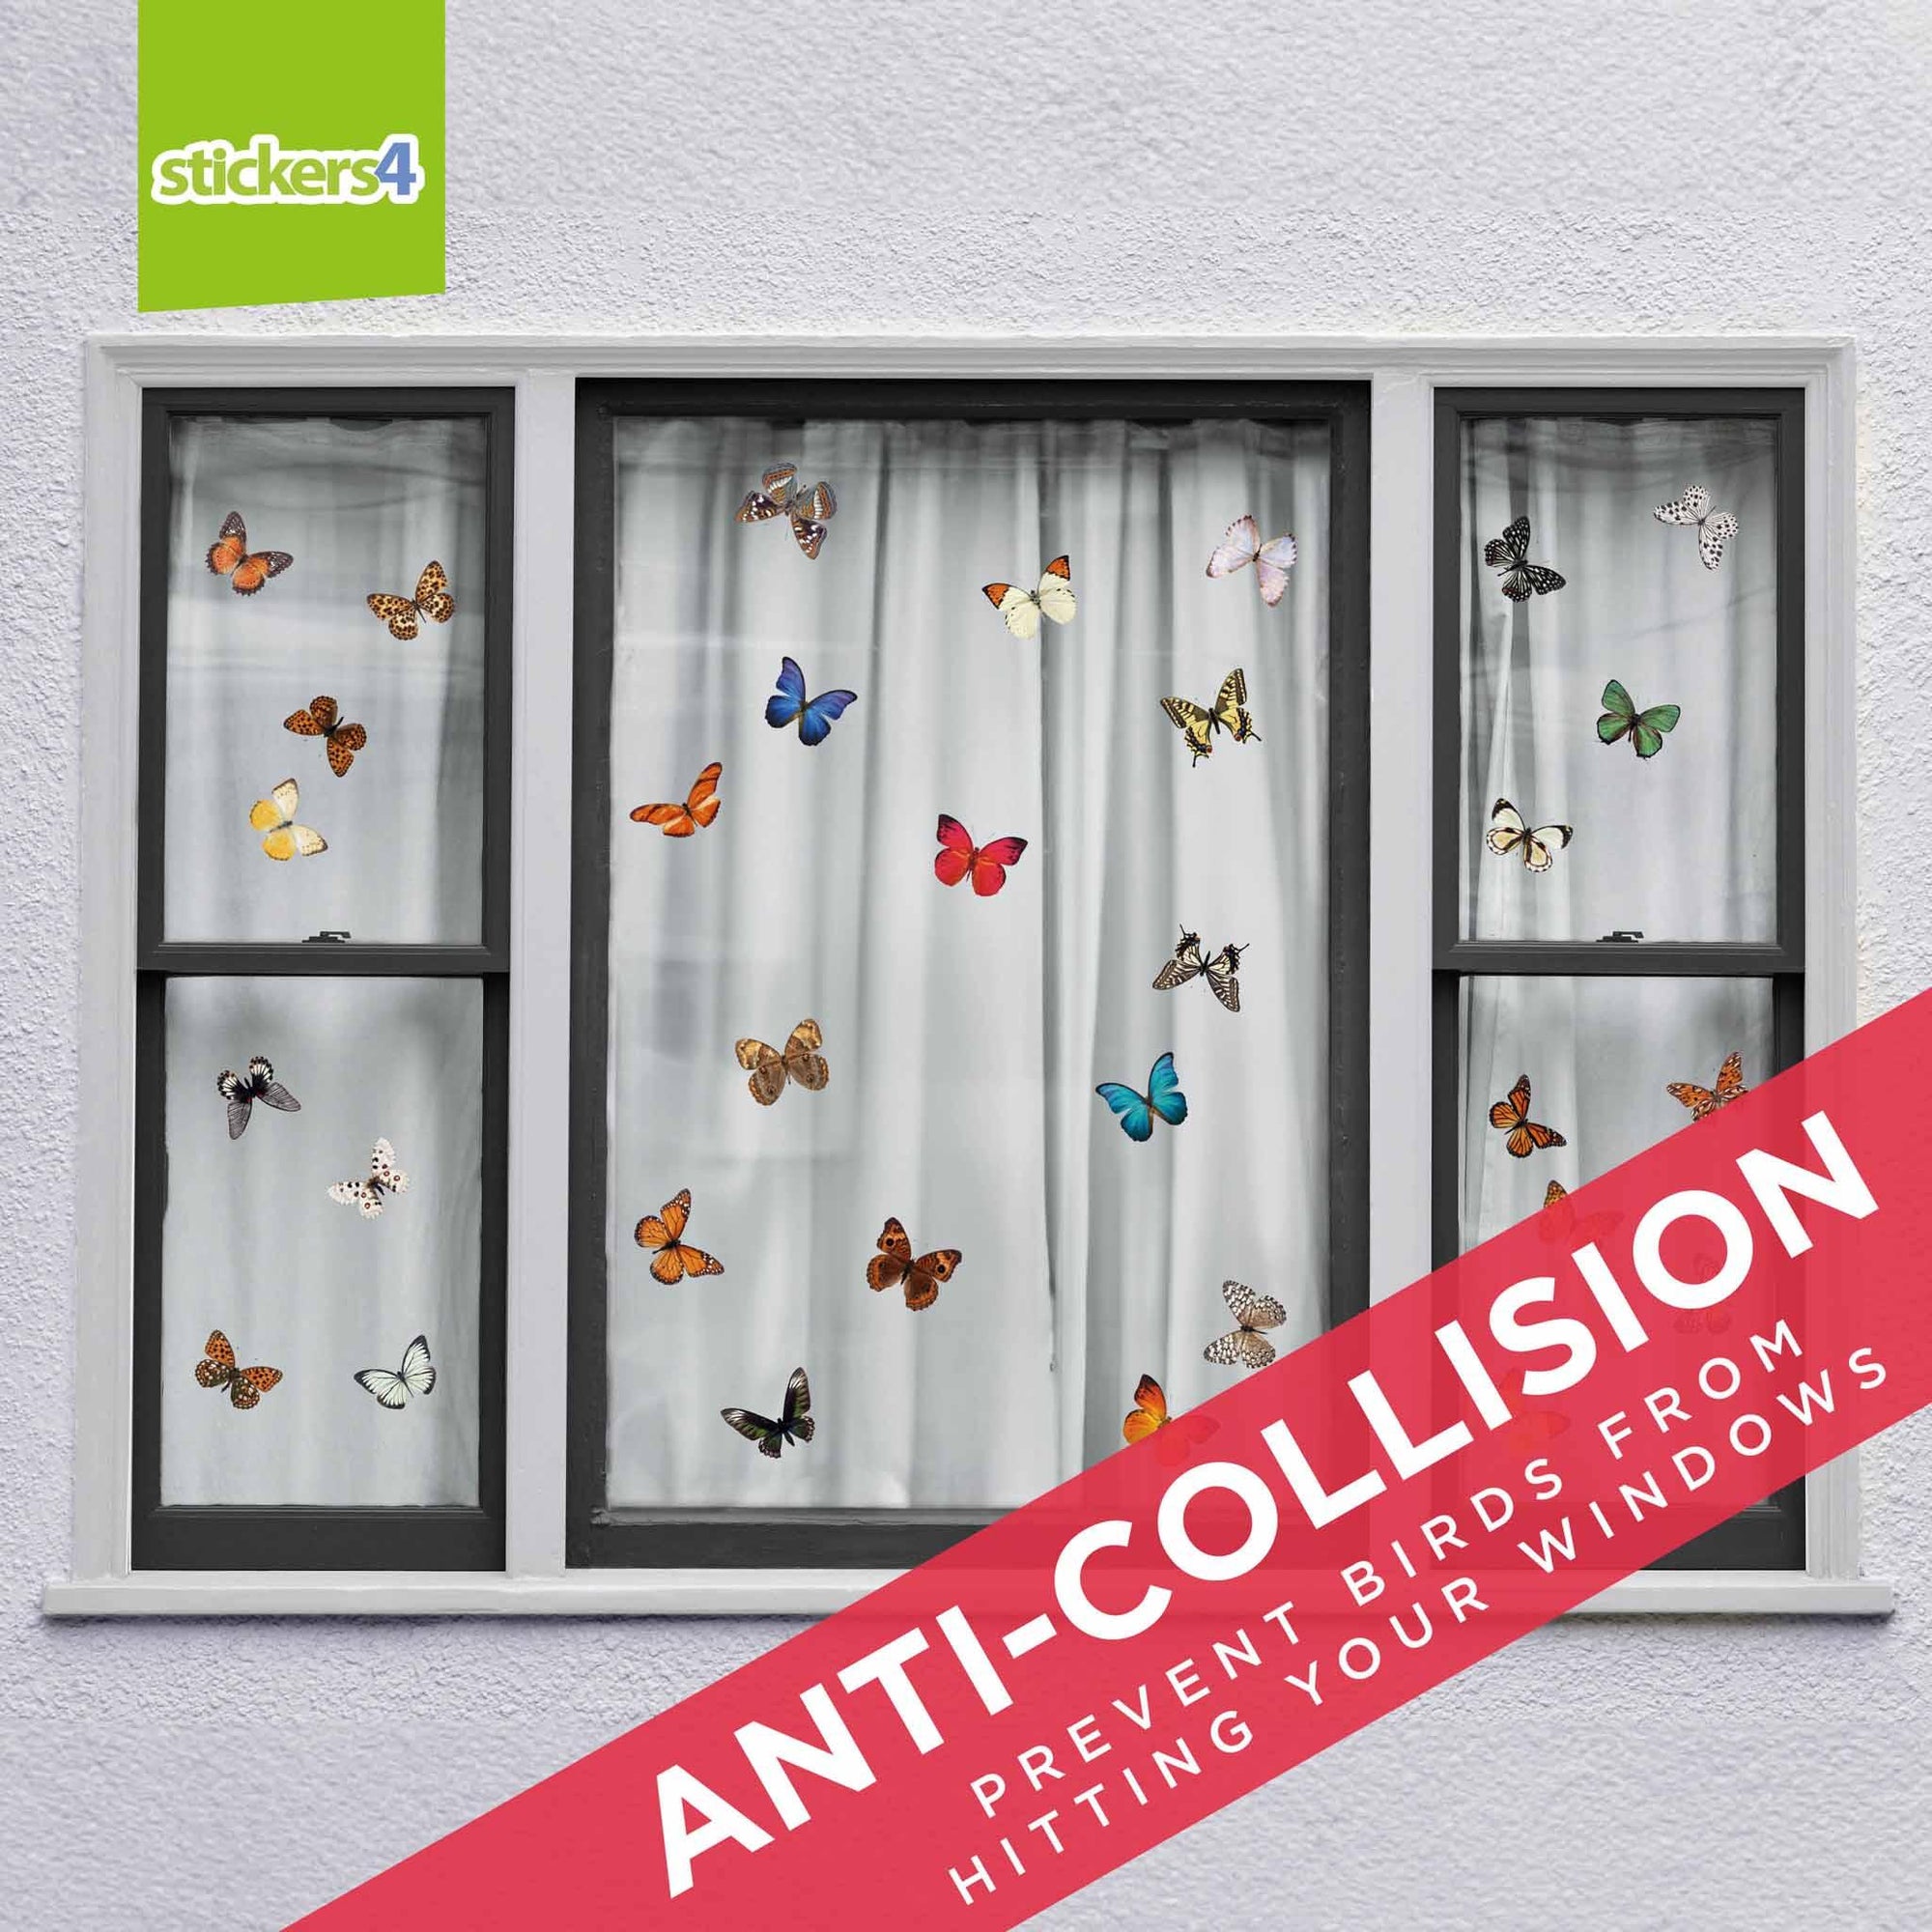 32 Photorealistic Butterfly Cling Window Stickers - Medium Size Decorative Bird Strike Prevention